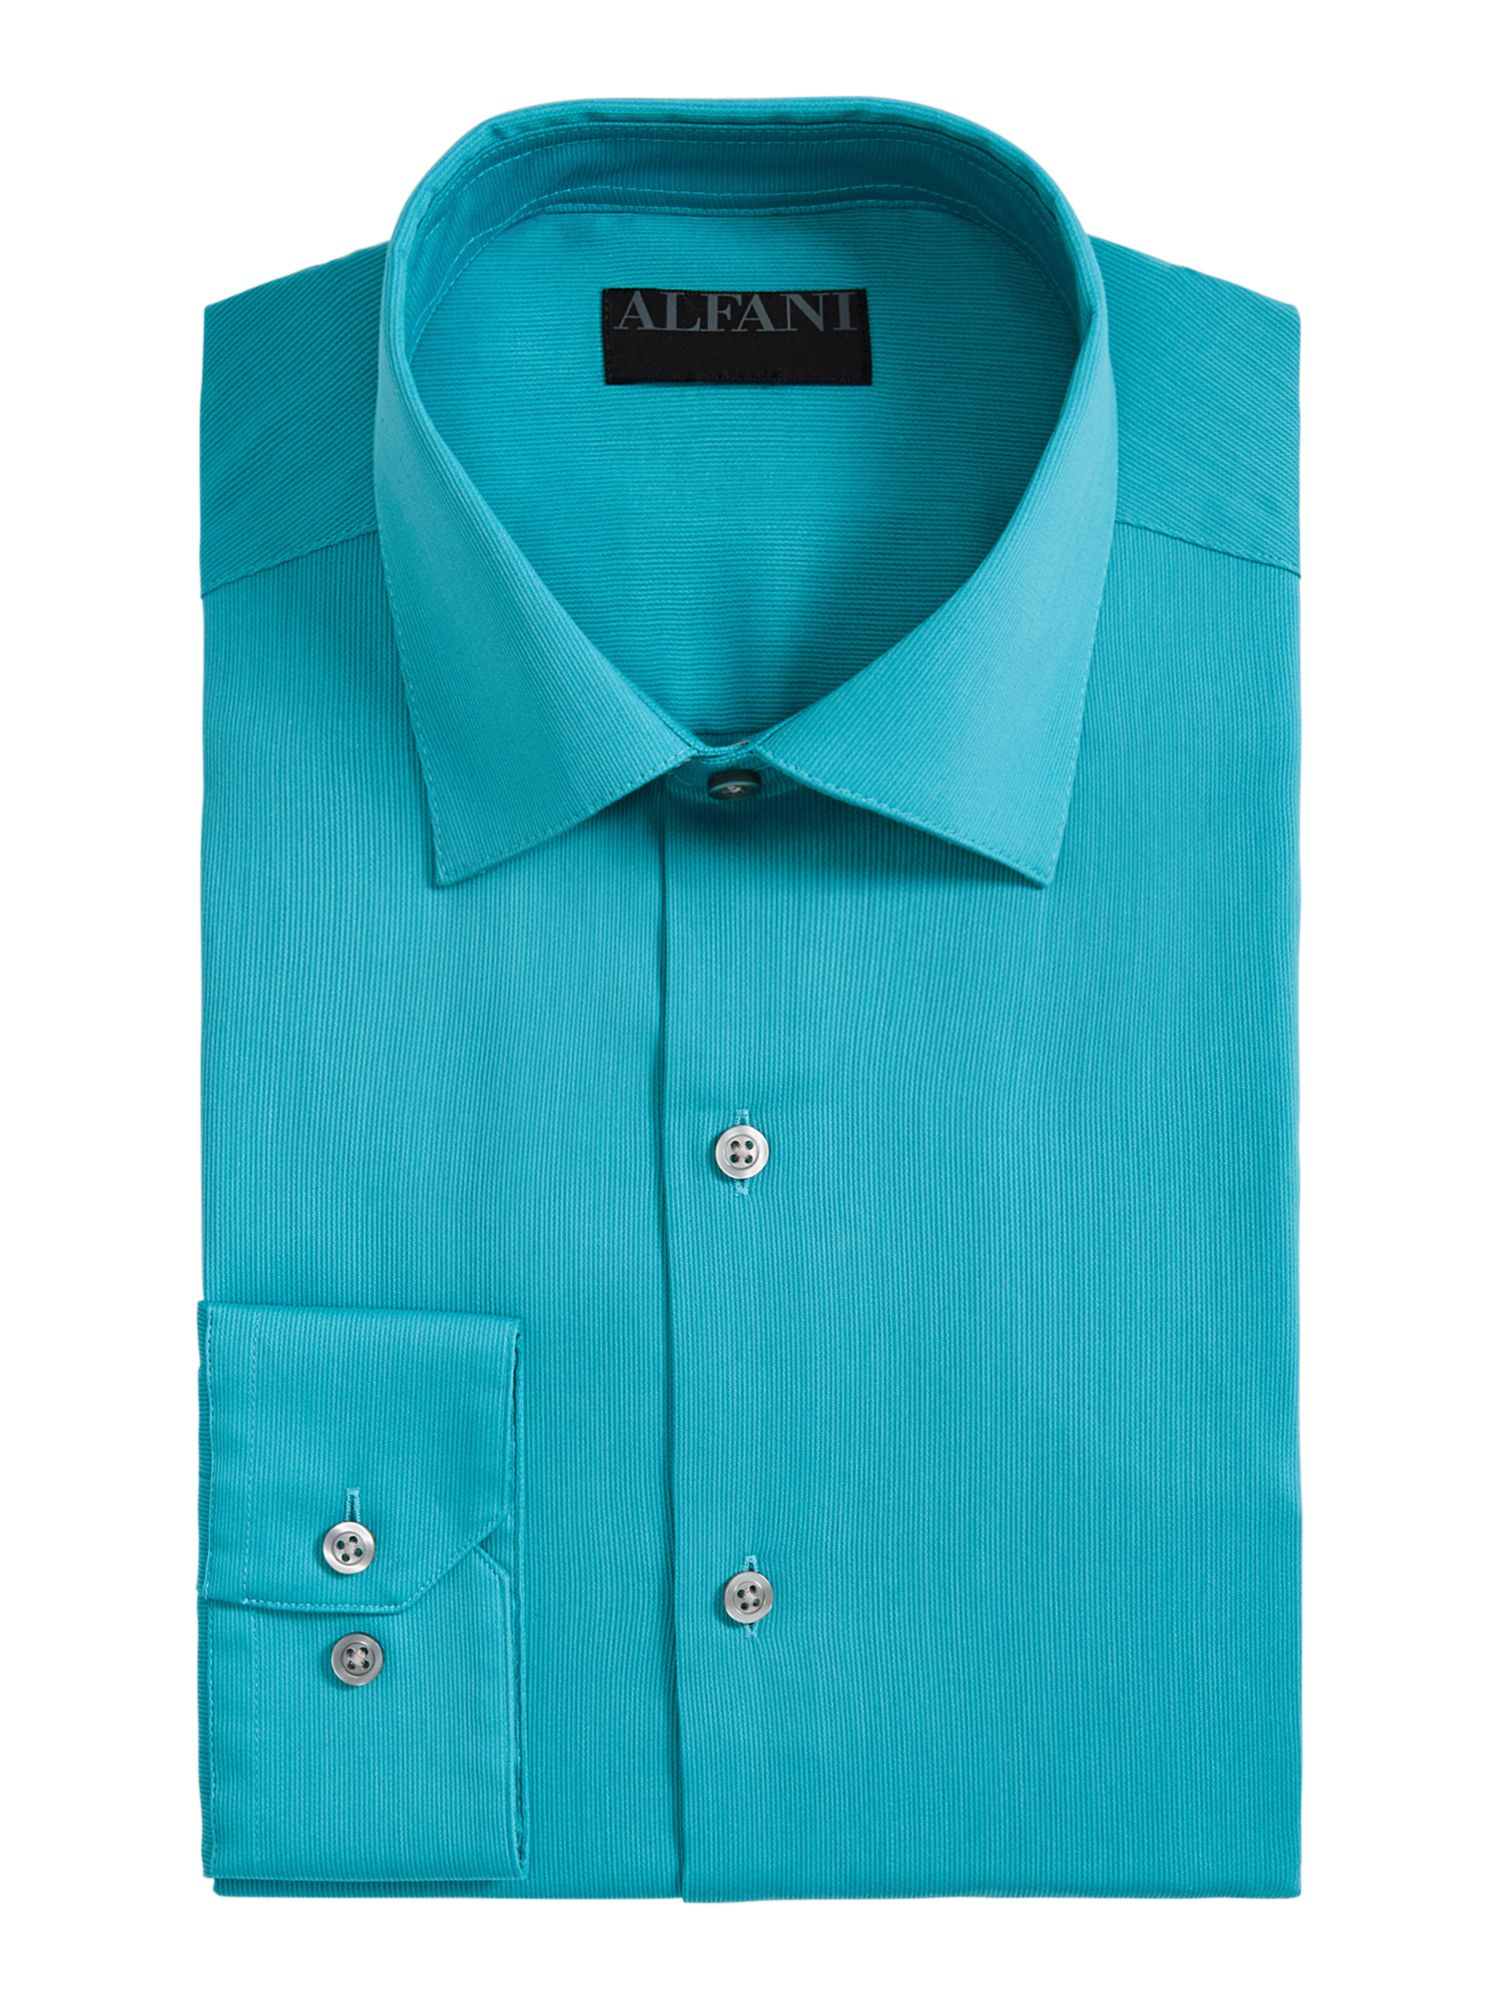 ALFANI Mens Turquoise Work Dress Shirt ...